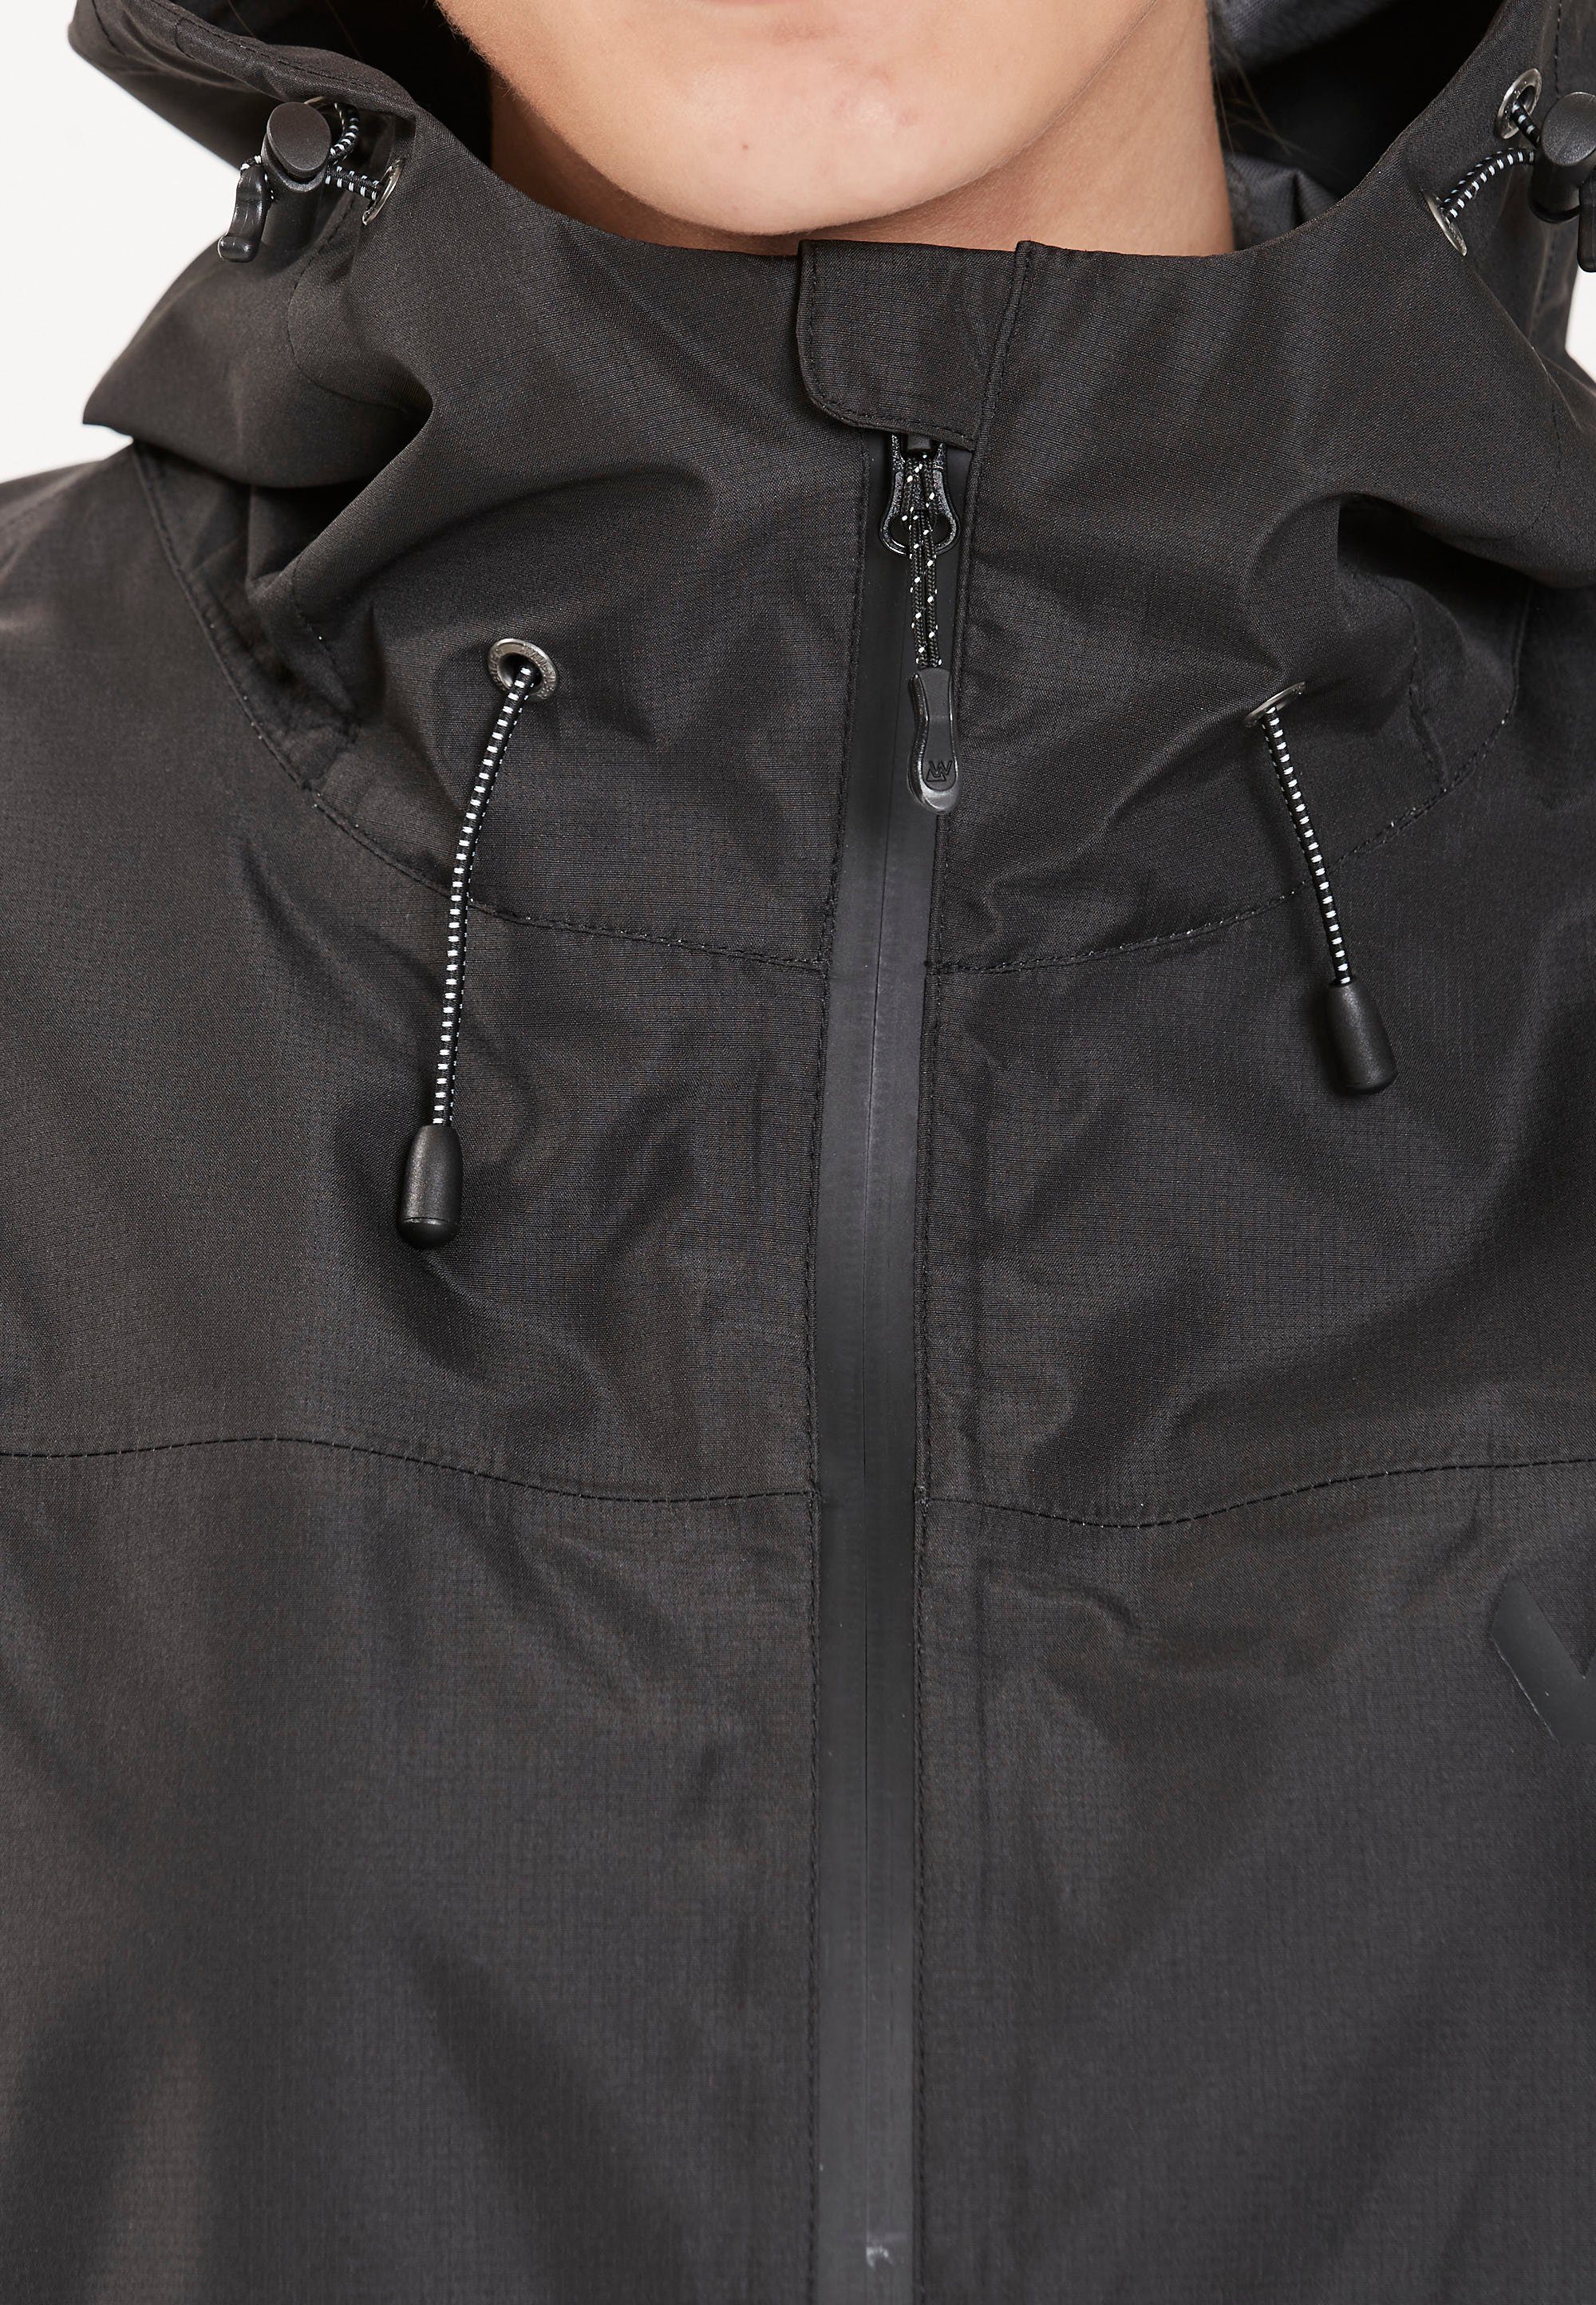 WHISTLER Softshelljacke 15000 mit BROOK Shell W-PRO praktischer schwarz Jacket Kapuze W